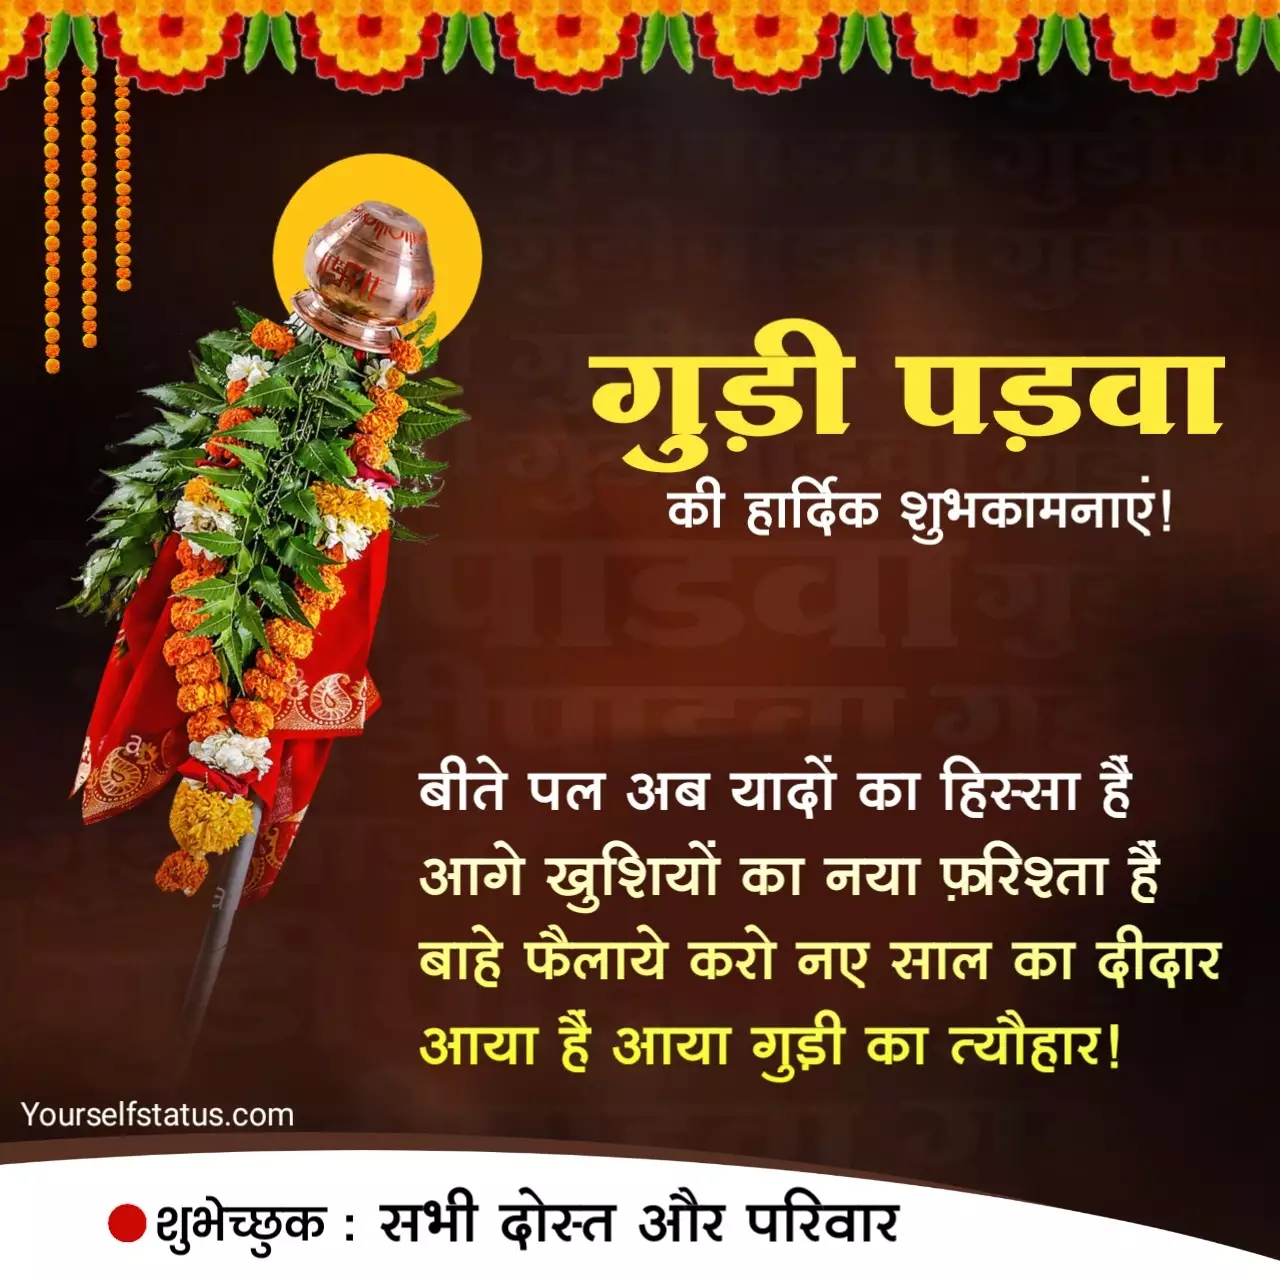 Gudi Padwa image in hindi